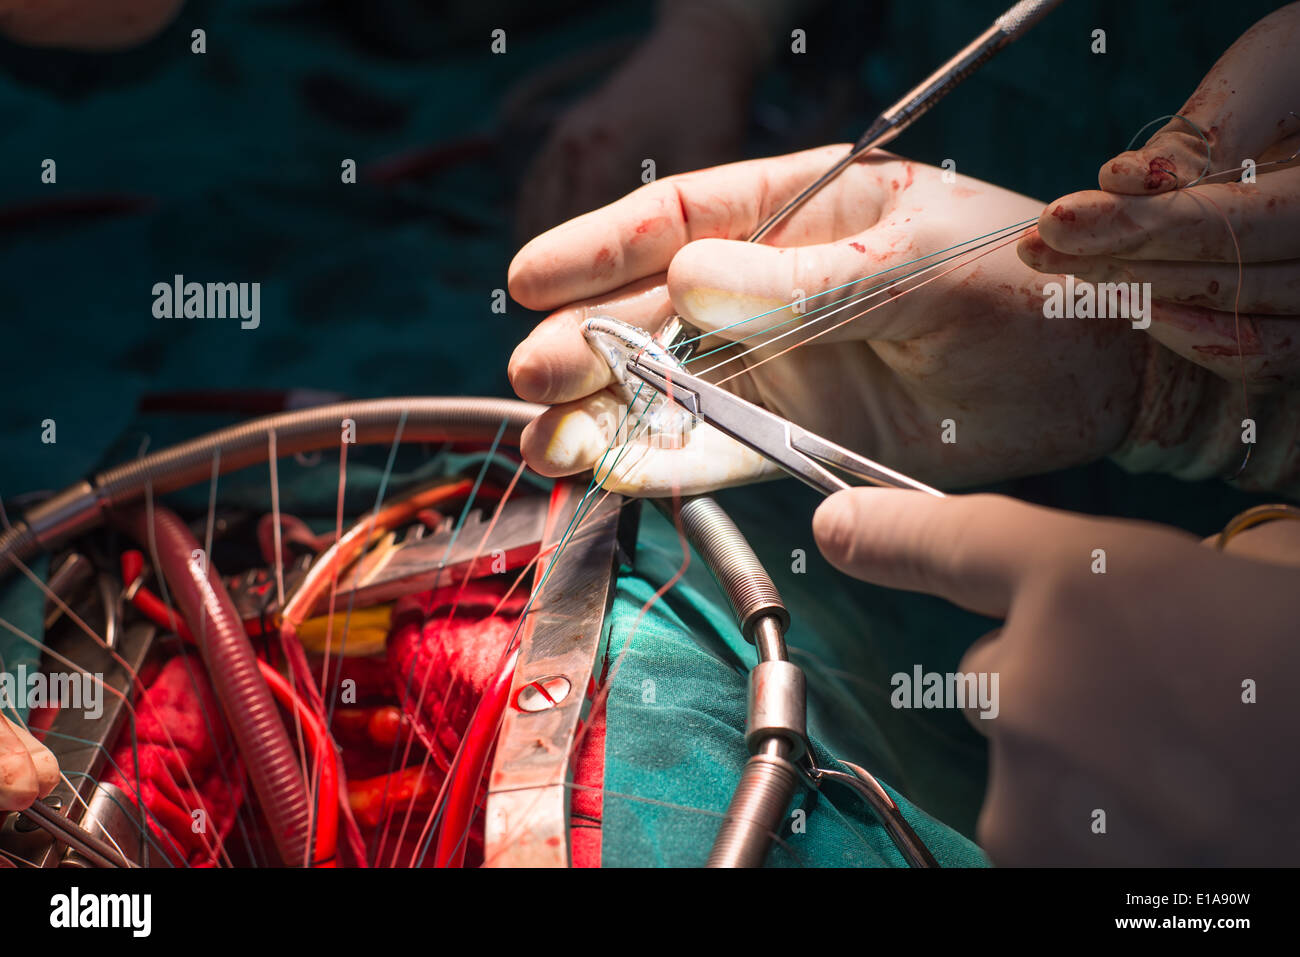 suture valve ring in mitral valve repair operation Stock Photo